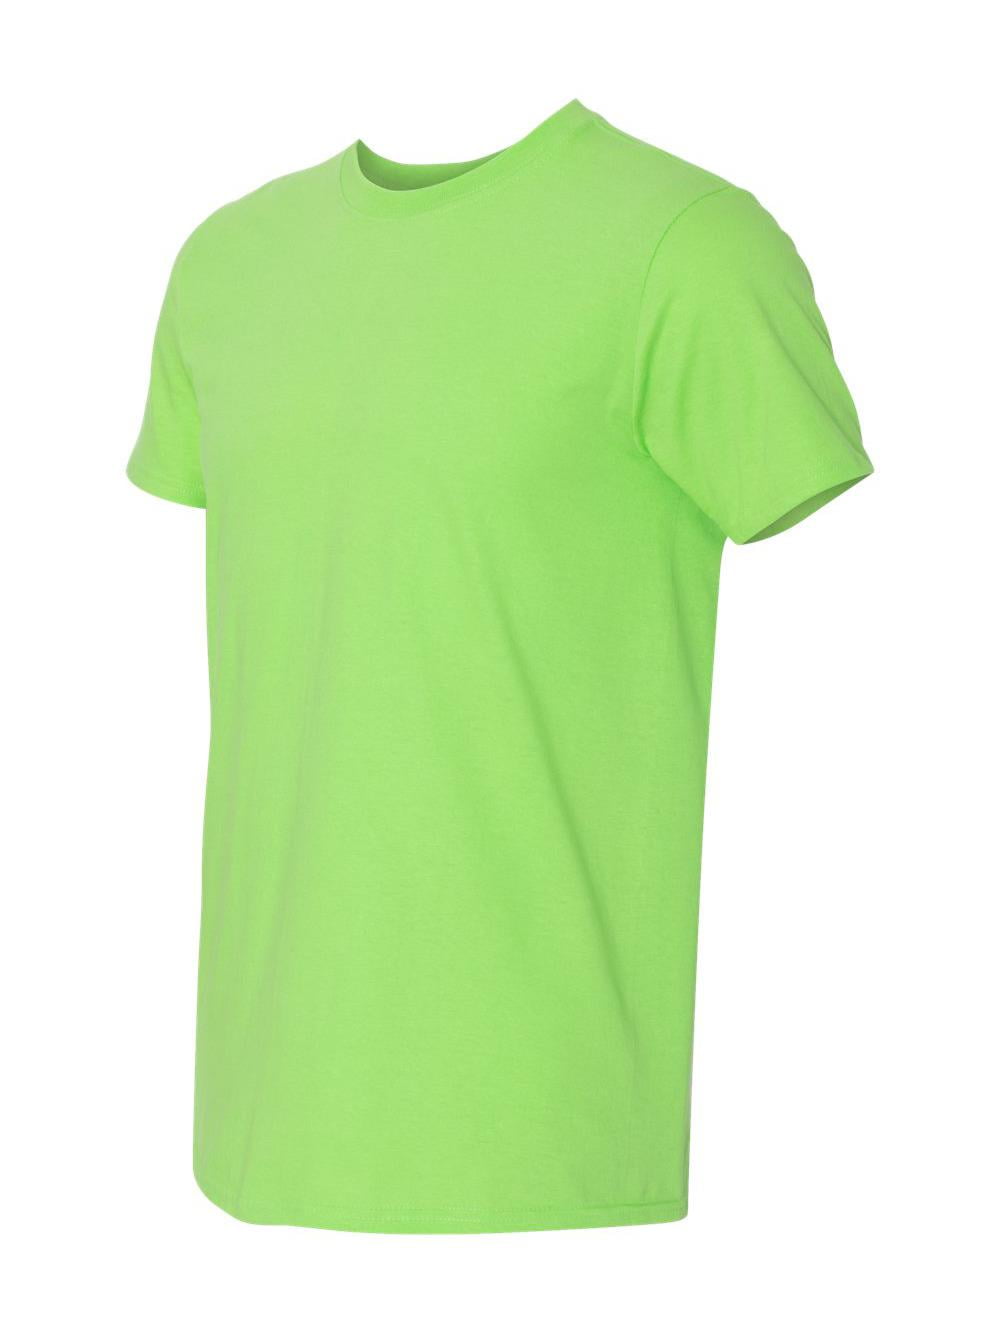 Gildan - Softstyle T-Shirt - 64000 - Lime - Size: M - Walmart.com